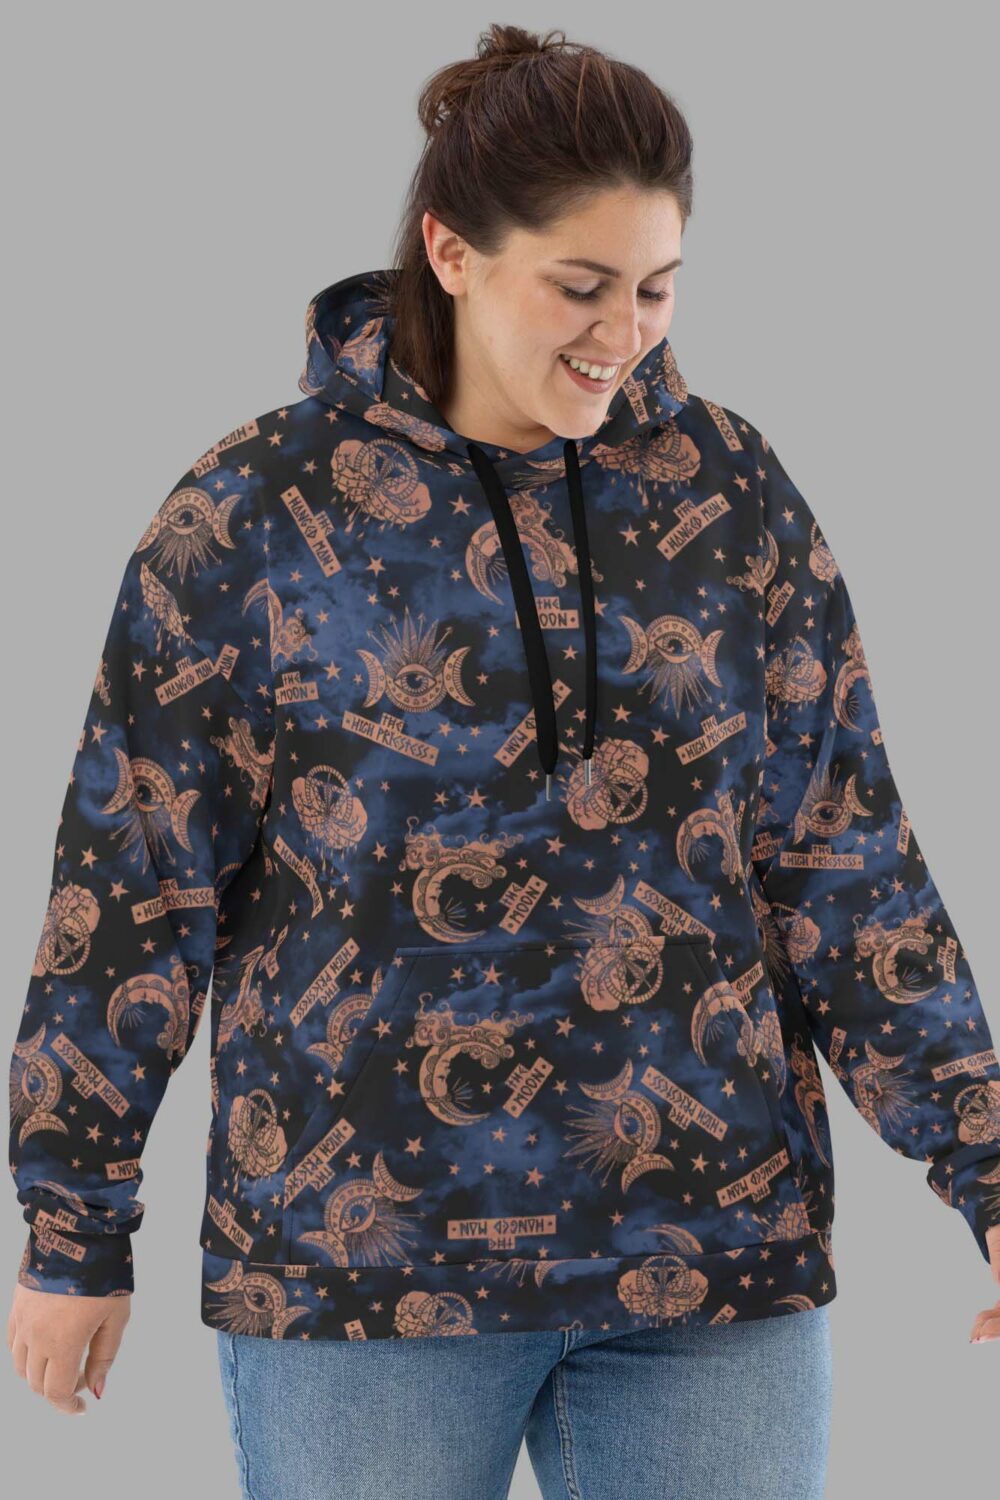 cosmic drifters hoodie front2 tarot print